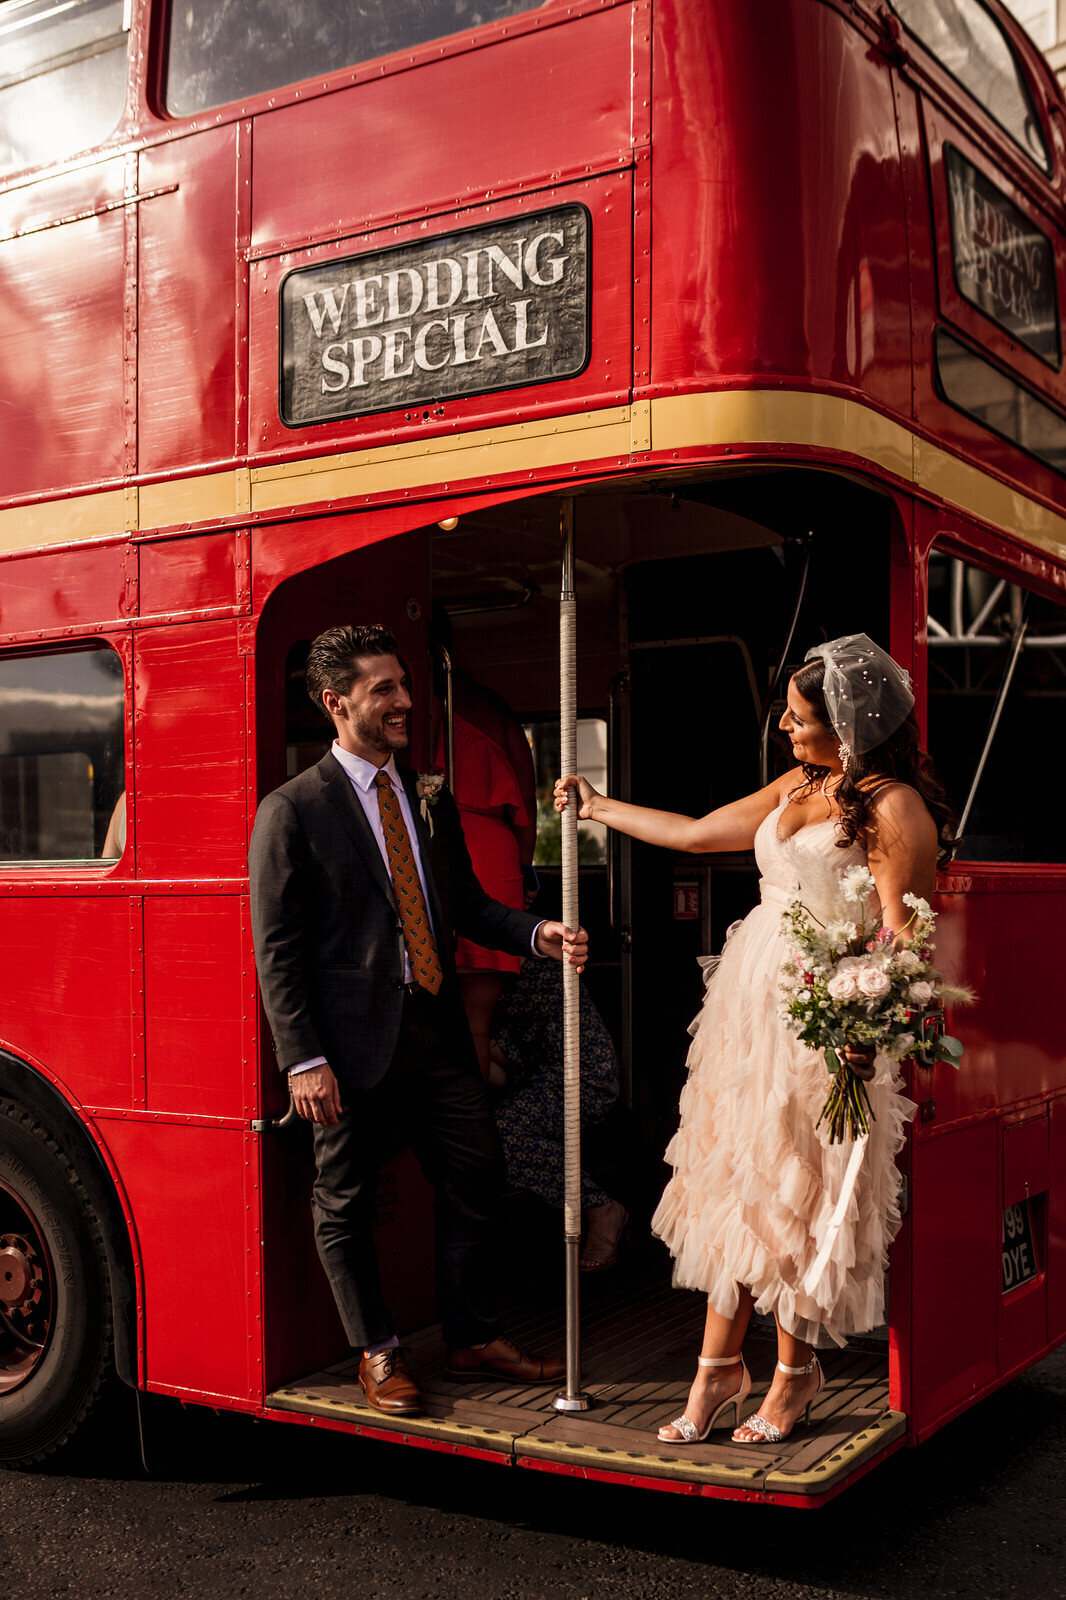 London Bus Wedding Wedding Photography